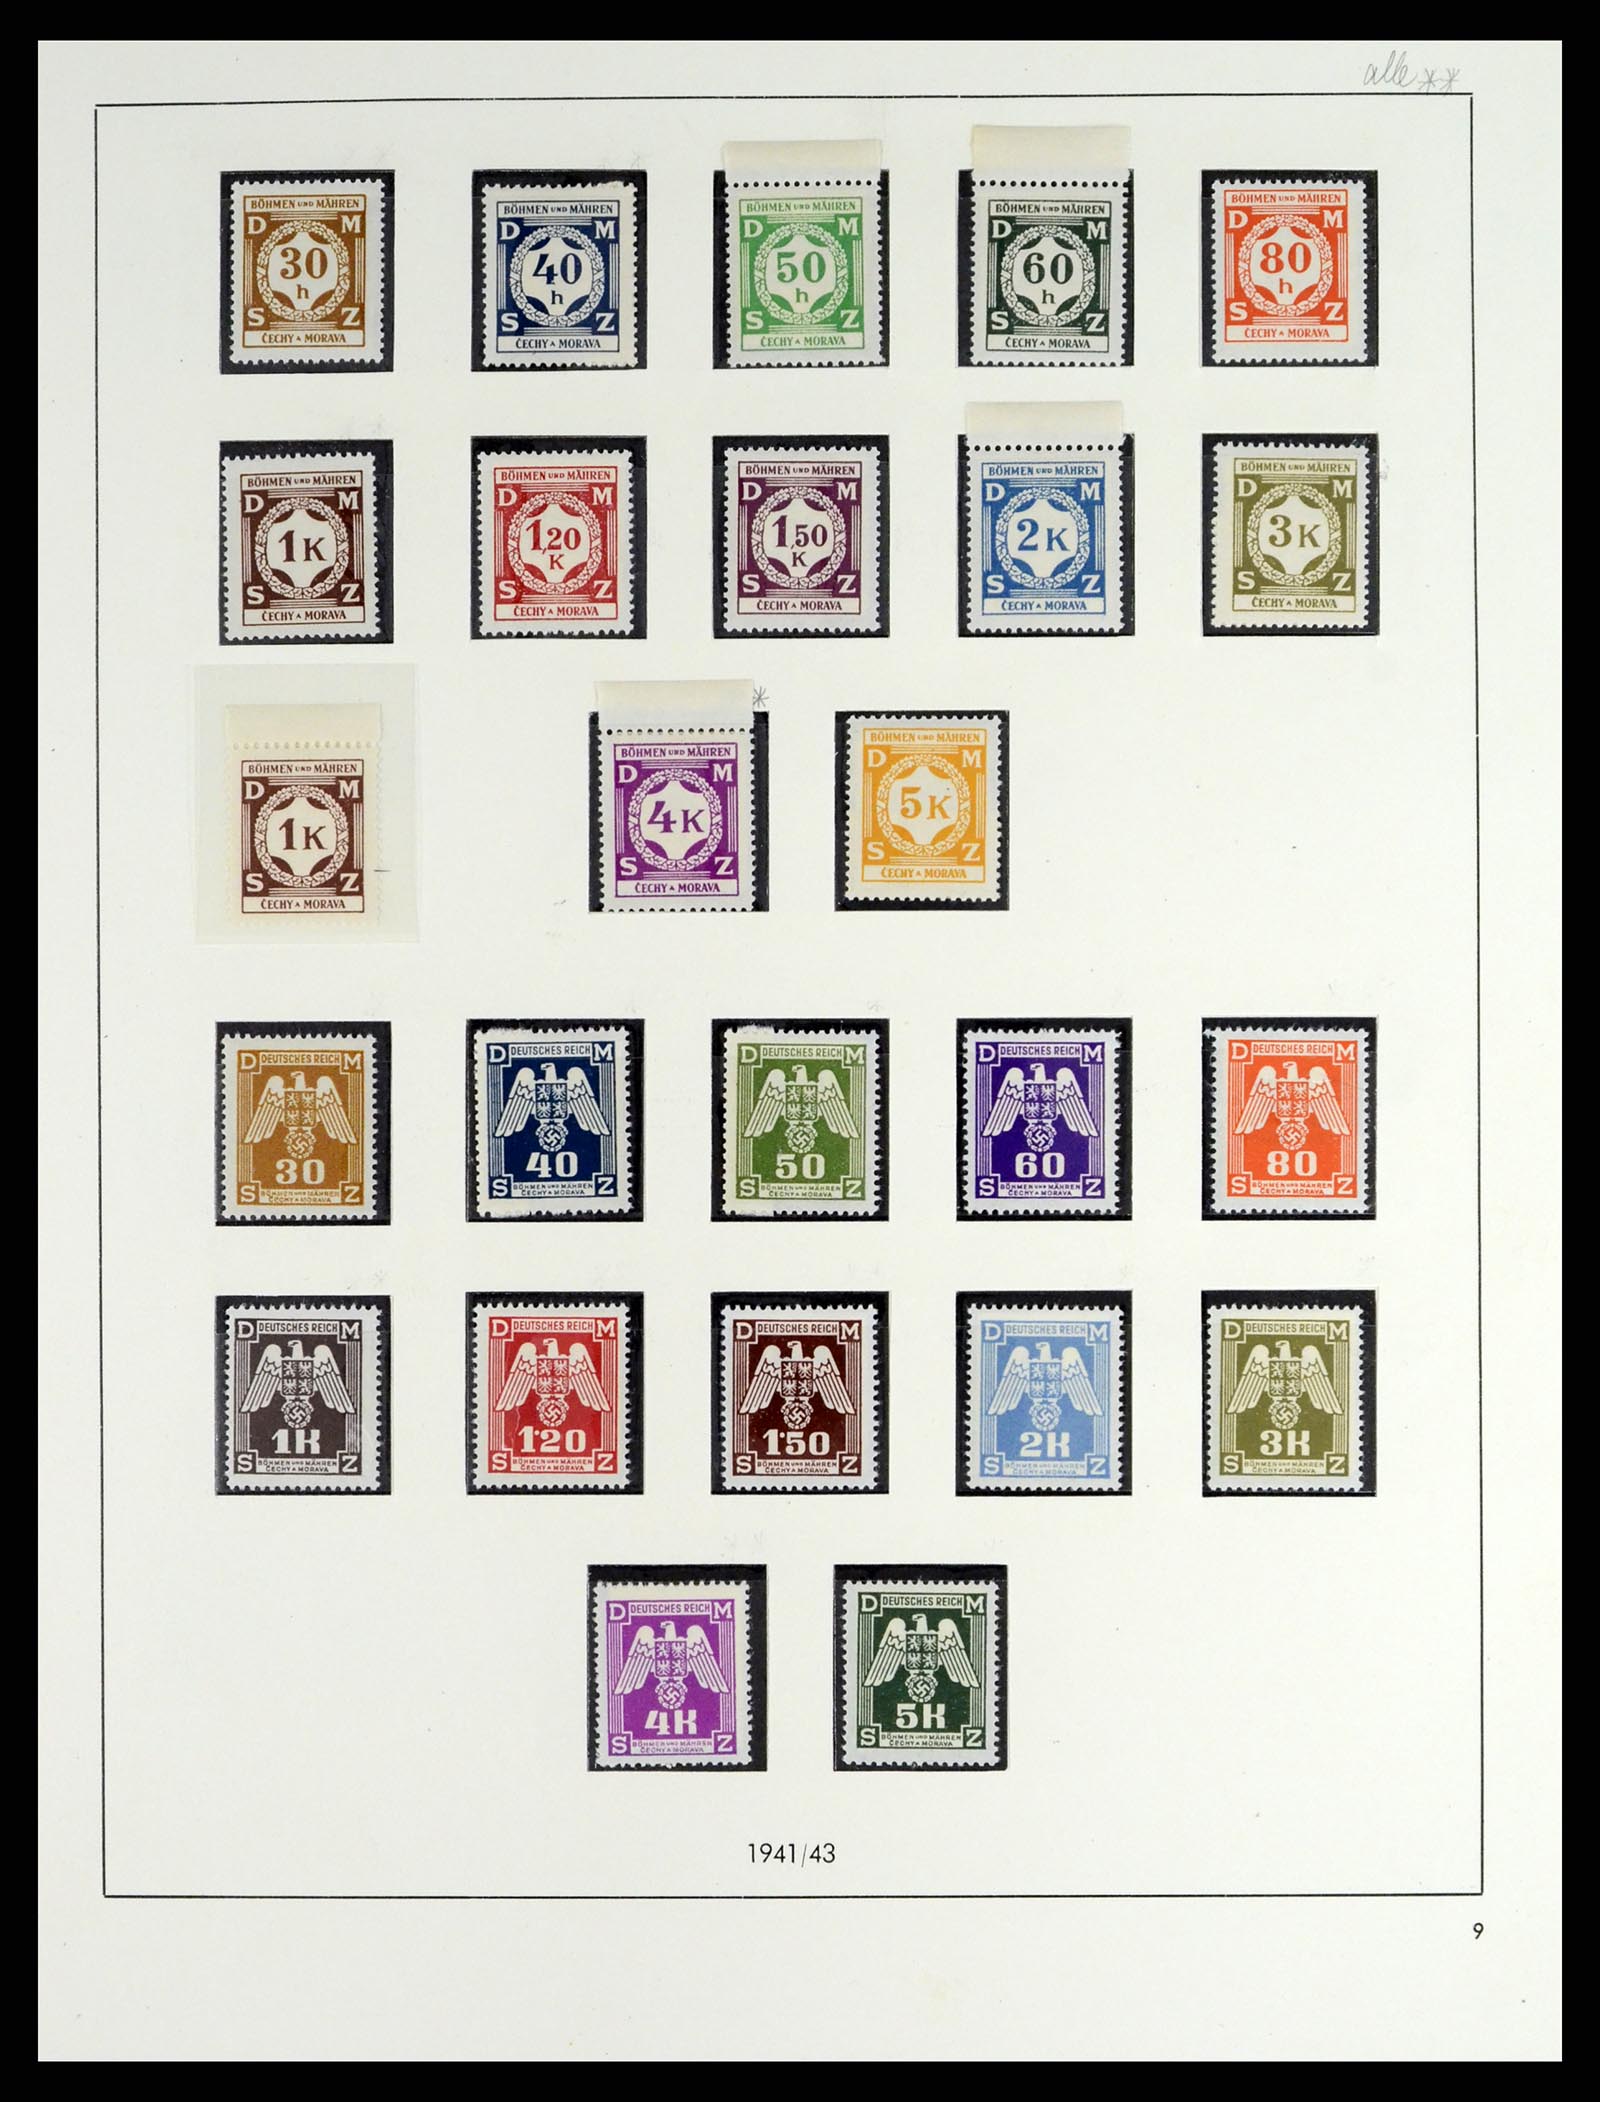 37535 035 - Stamp collection 37535 German occupation second worldwar 1939-1945.